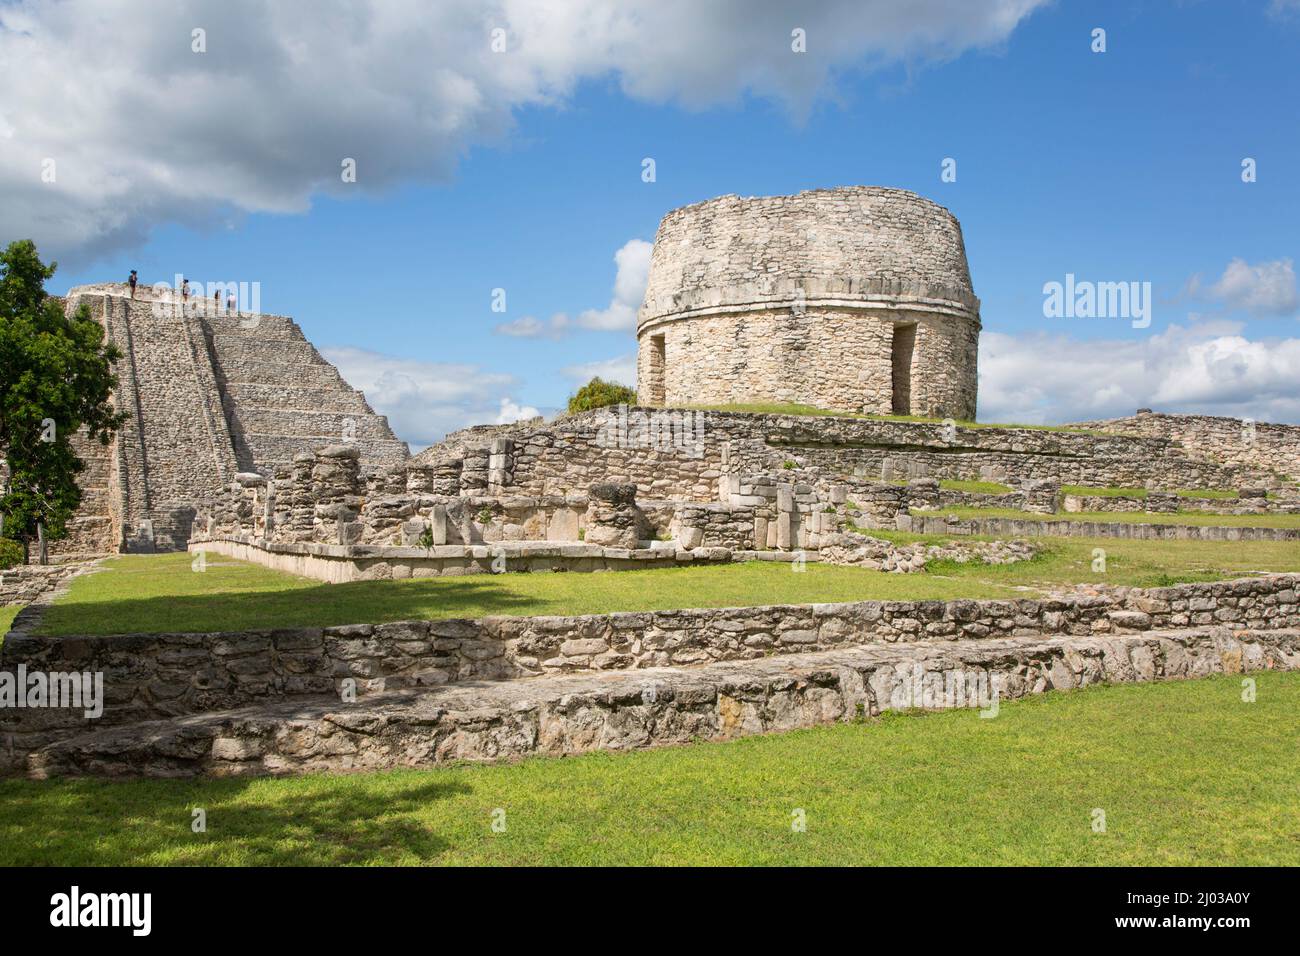 Runder Tempel im Zentrum und Kukulcan Tempel (Castillo), Maya-Ruinen, Mayapan Archäologische Zone, Yucatan Staat, Mexiko, Nordamerika Stockfoto